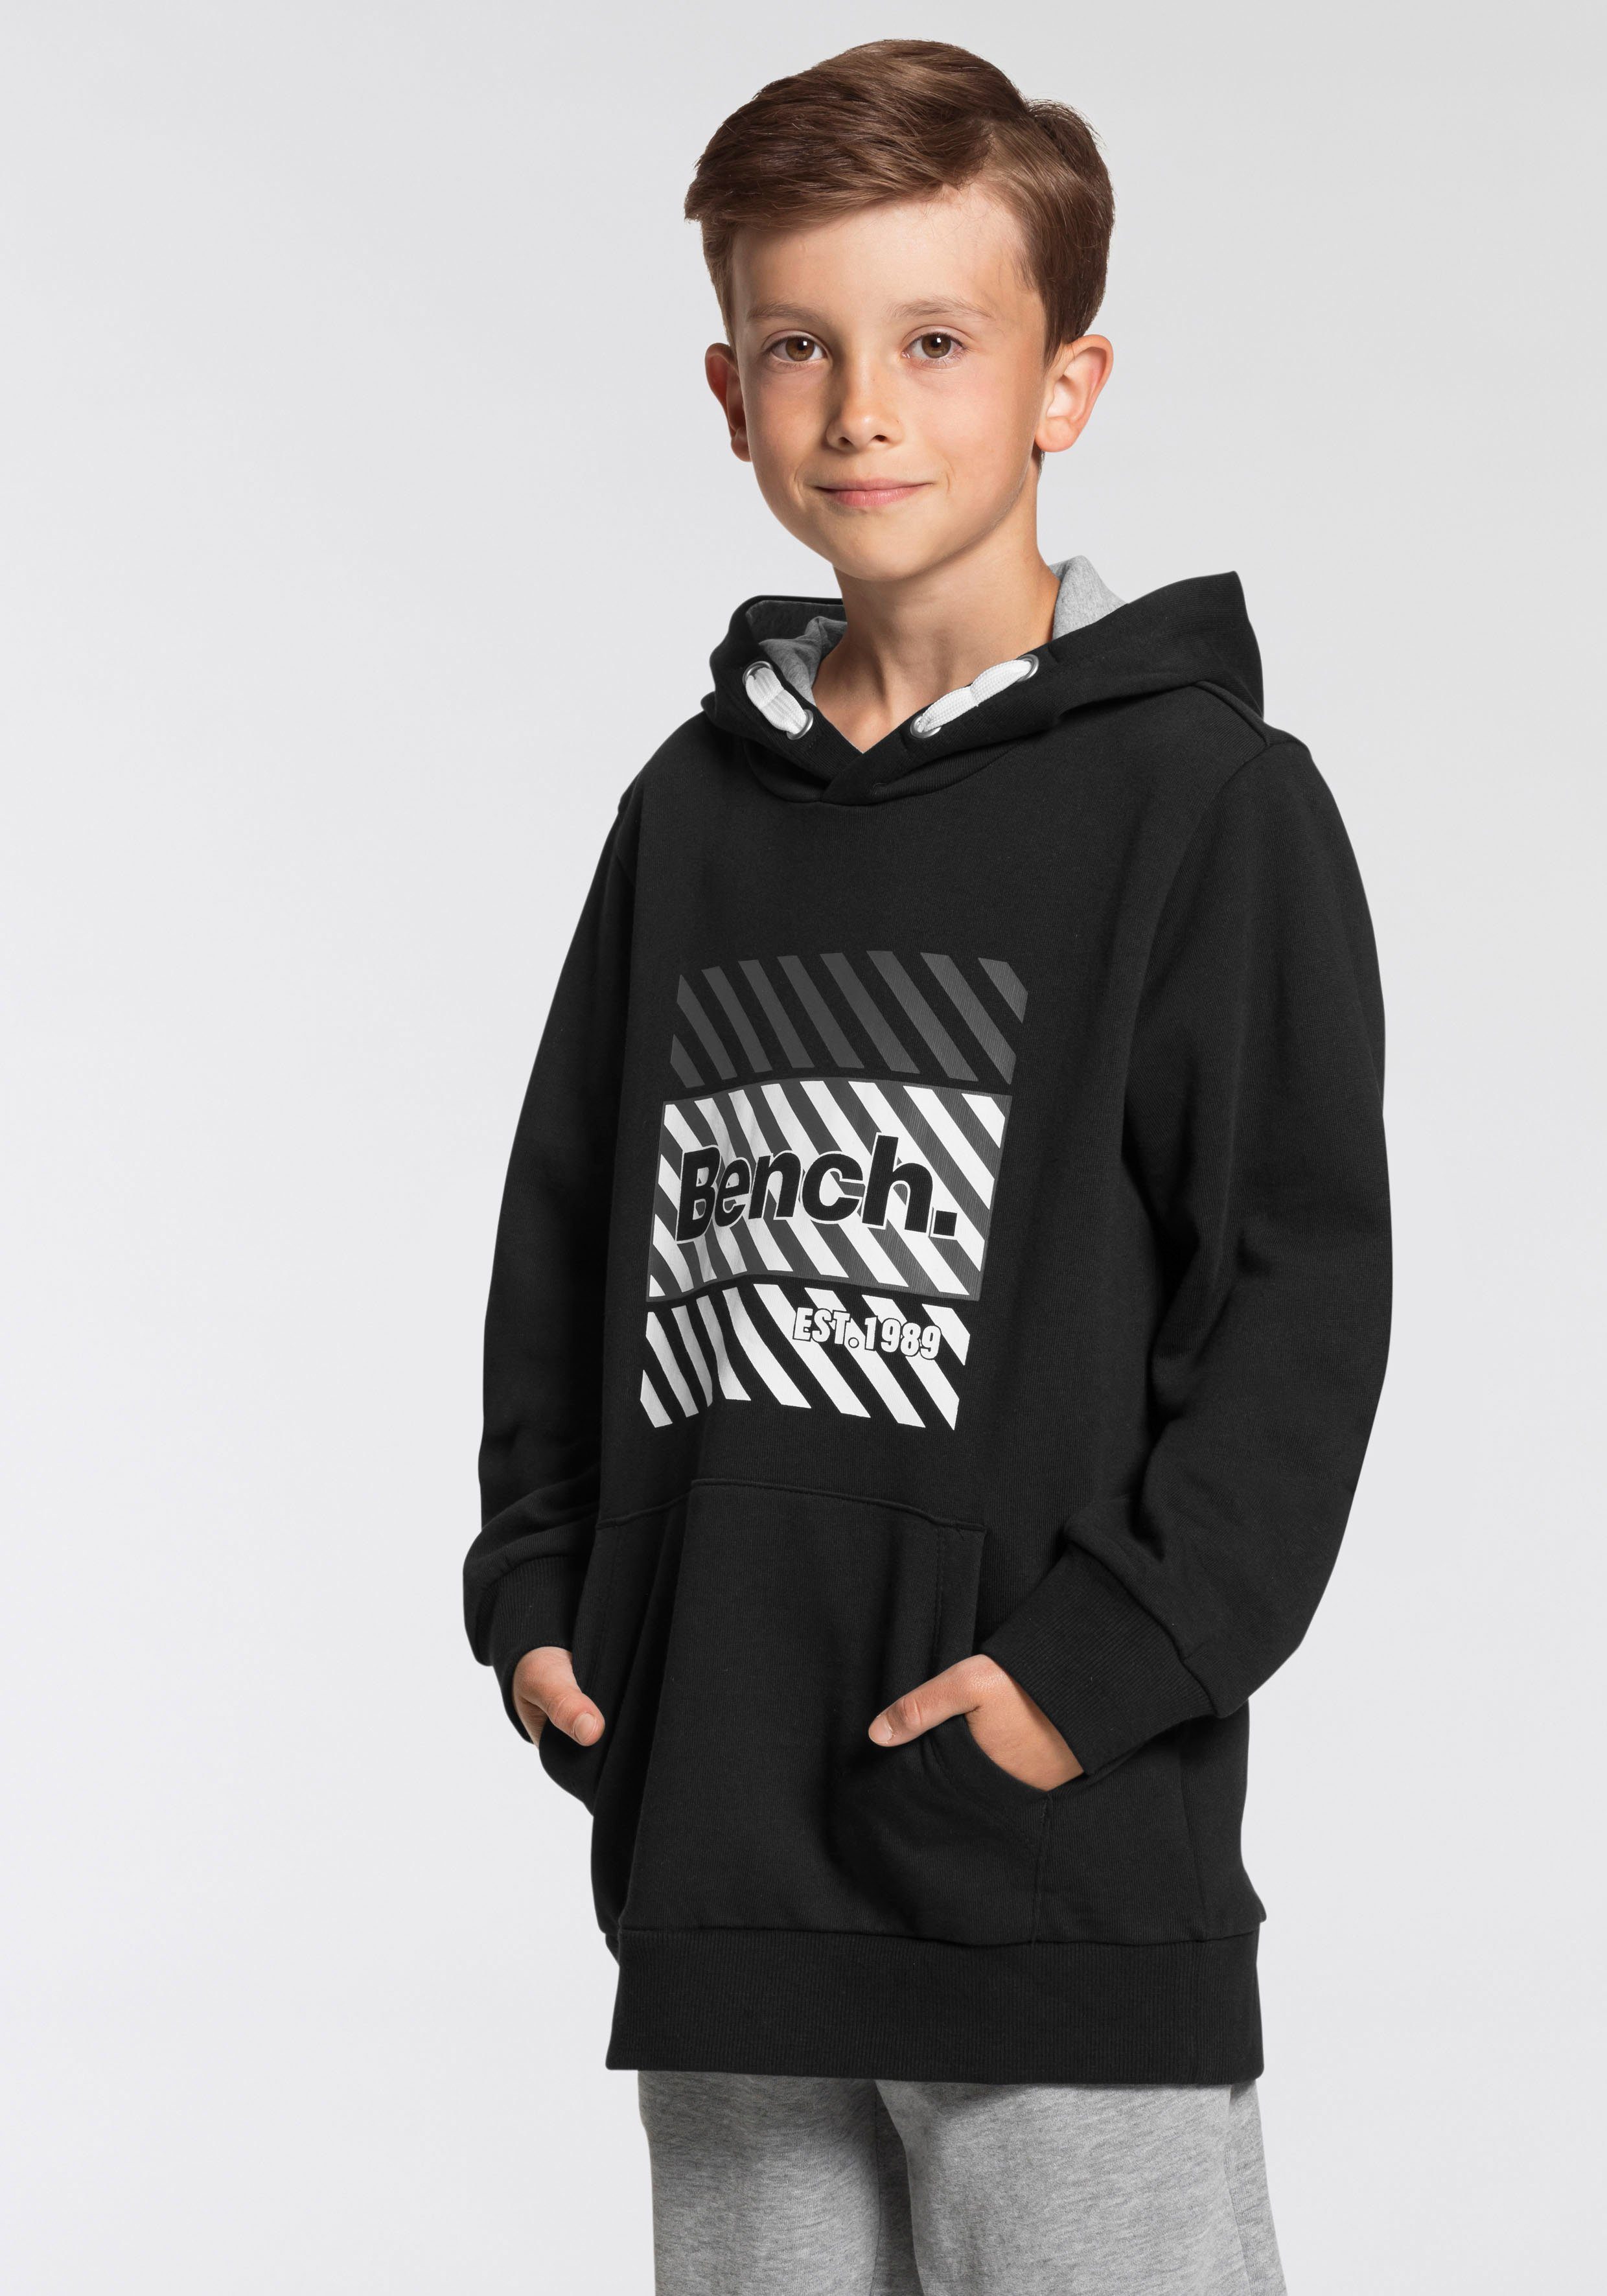 trendigem Kapuzensweatshirt Bench. Black&White mit Druck